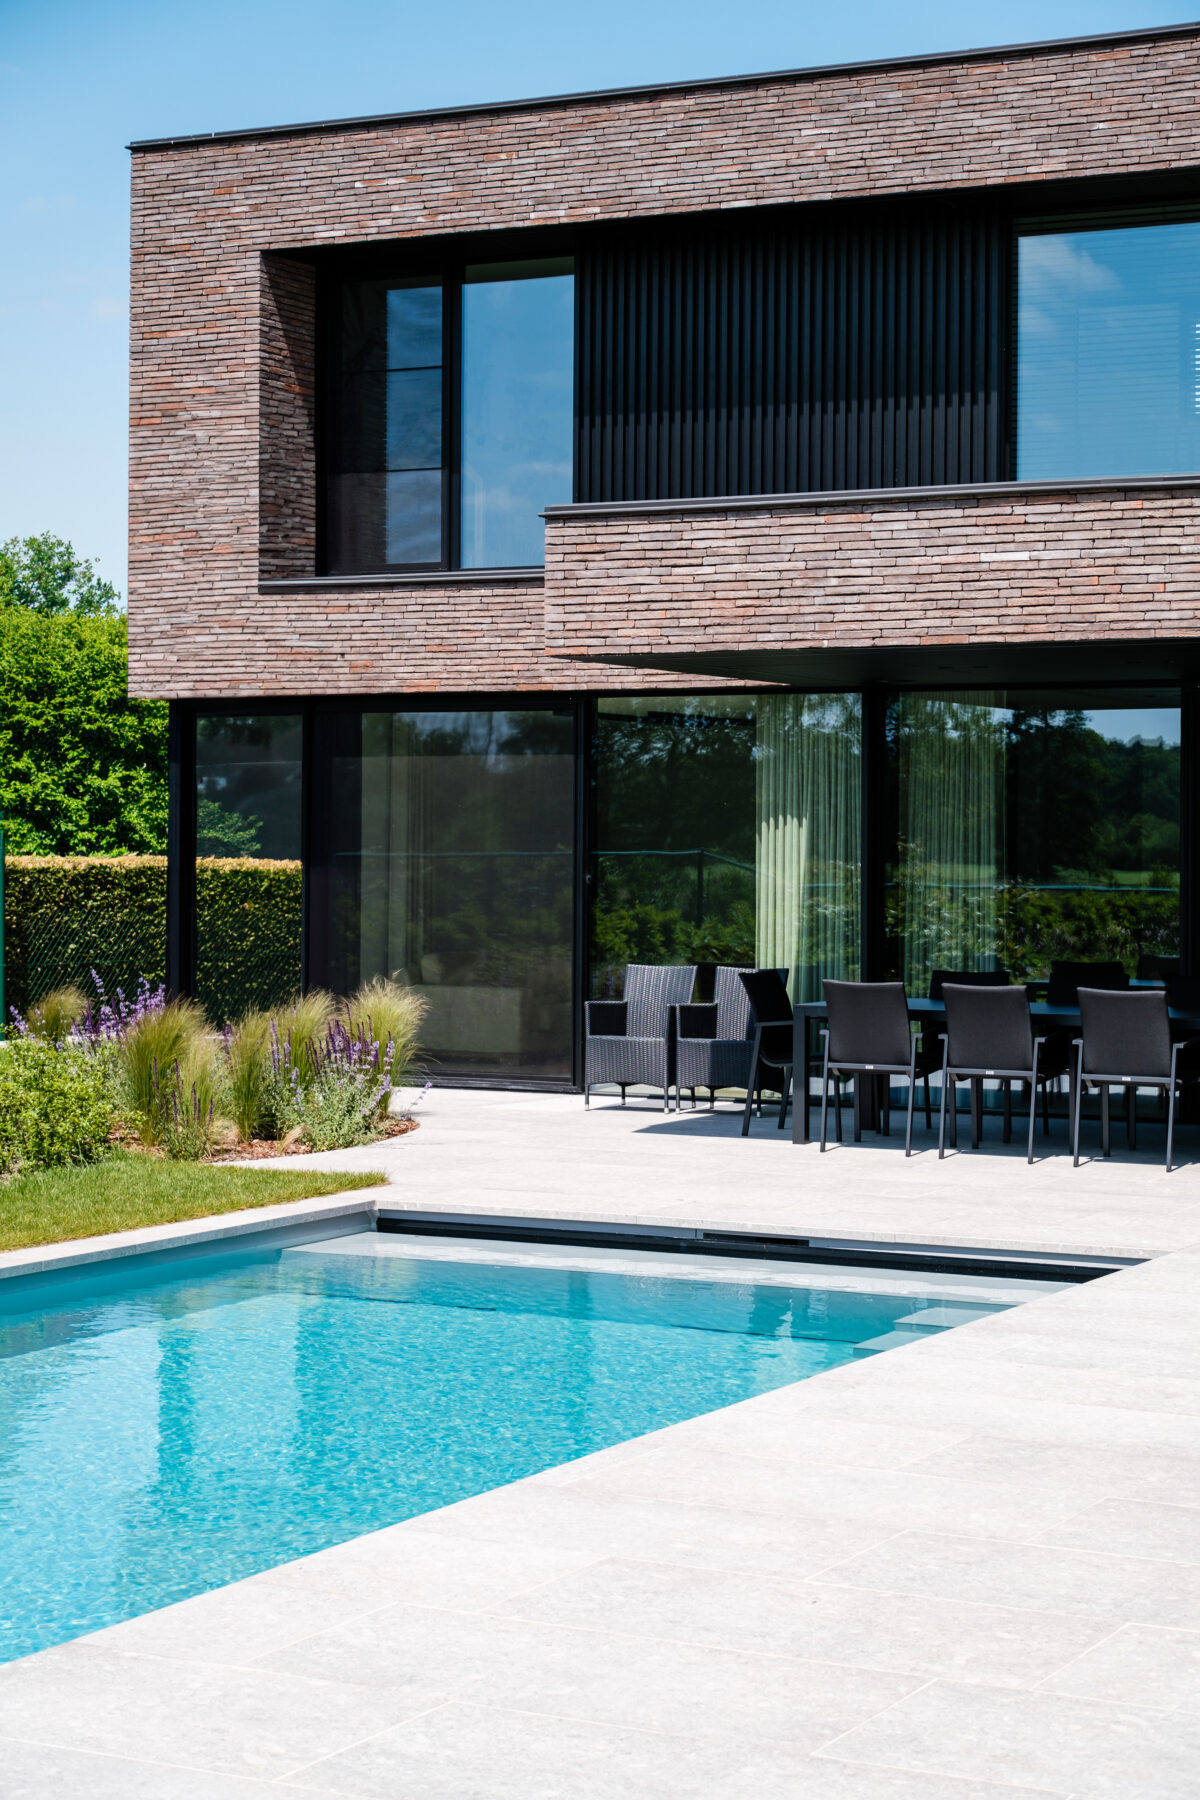 residentie hasselt architectuur baksteen aluminium gevelbekleding, zwembad, overdekt terras